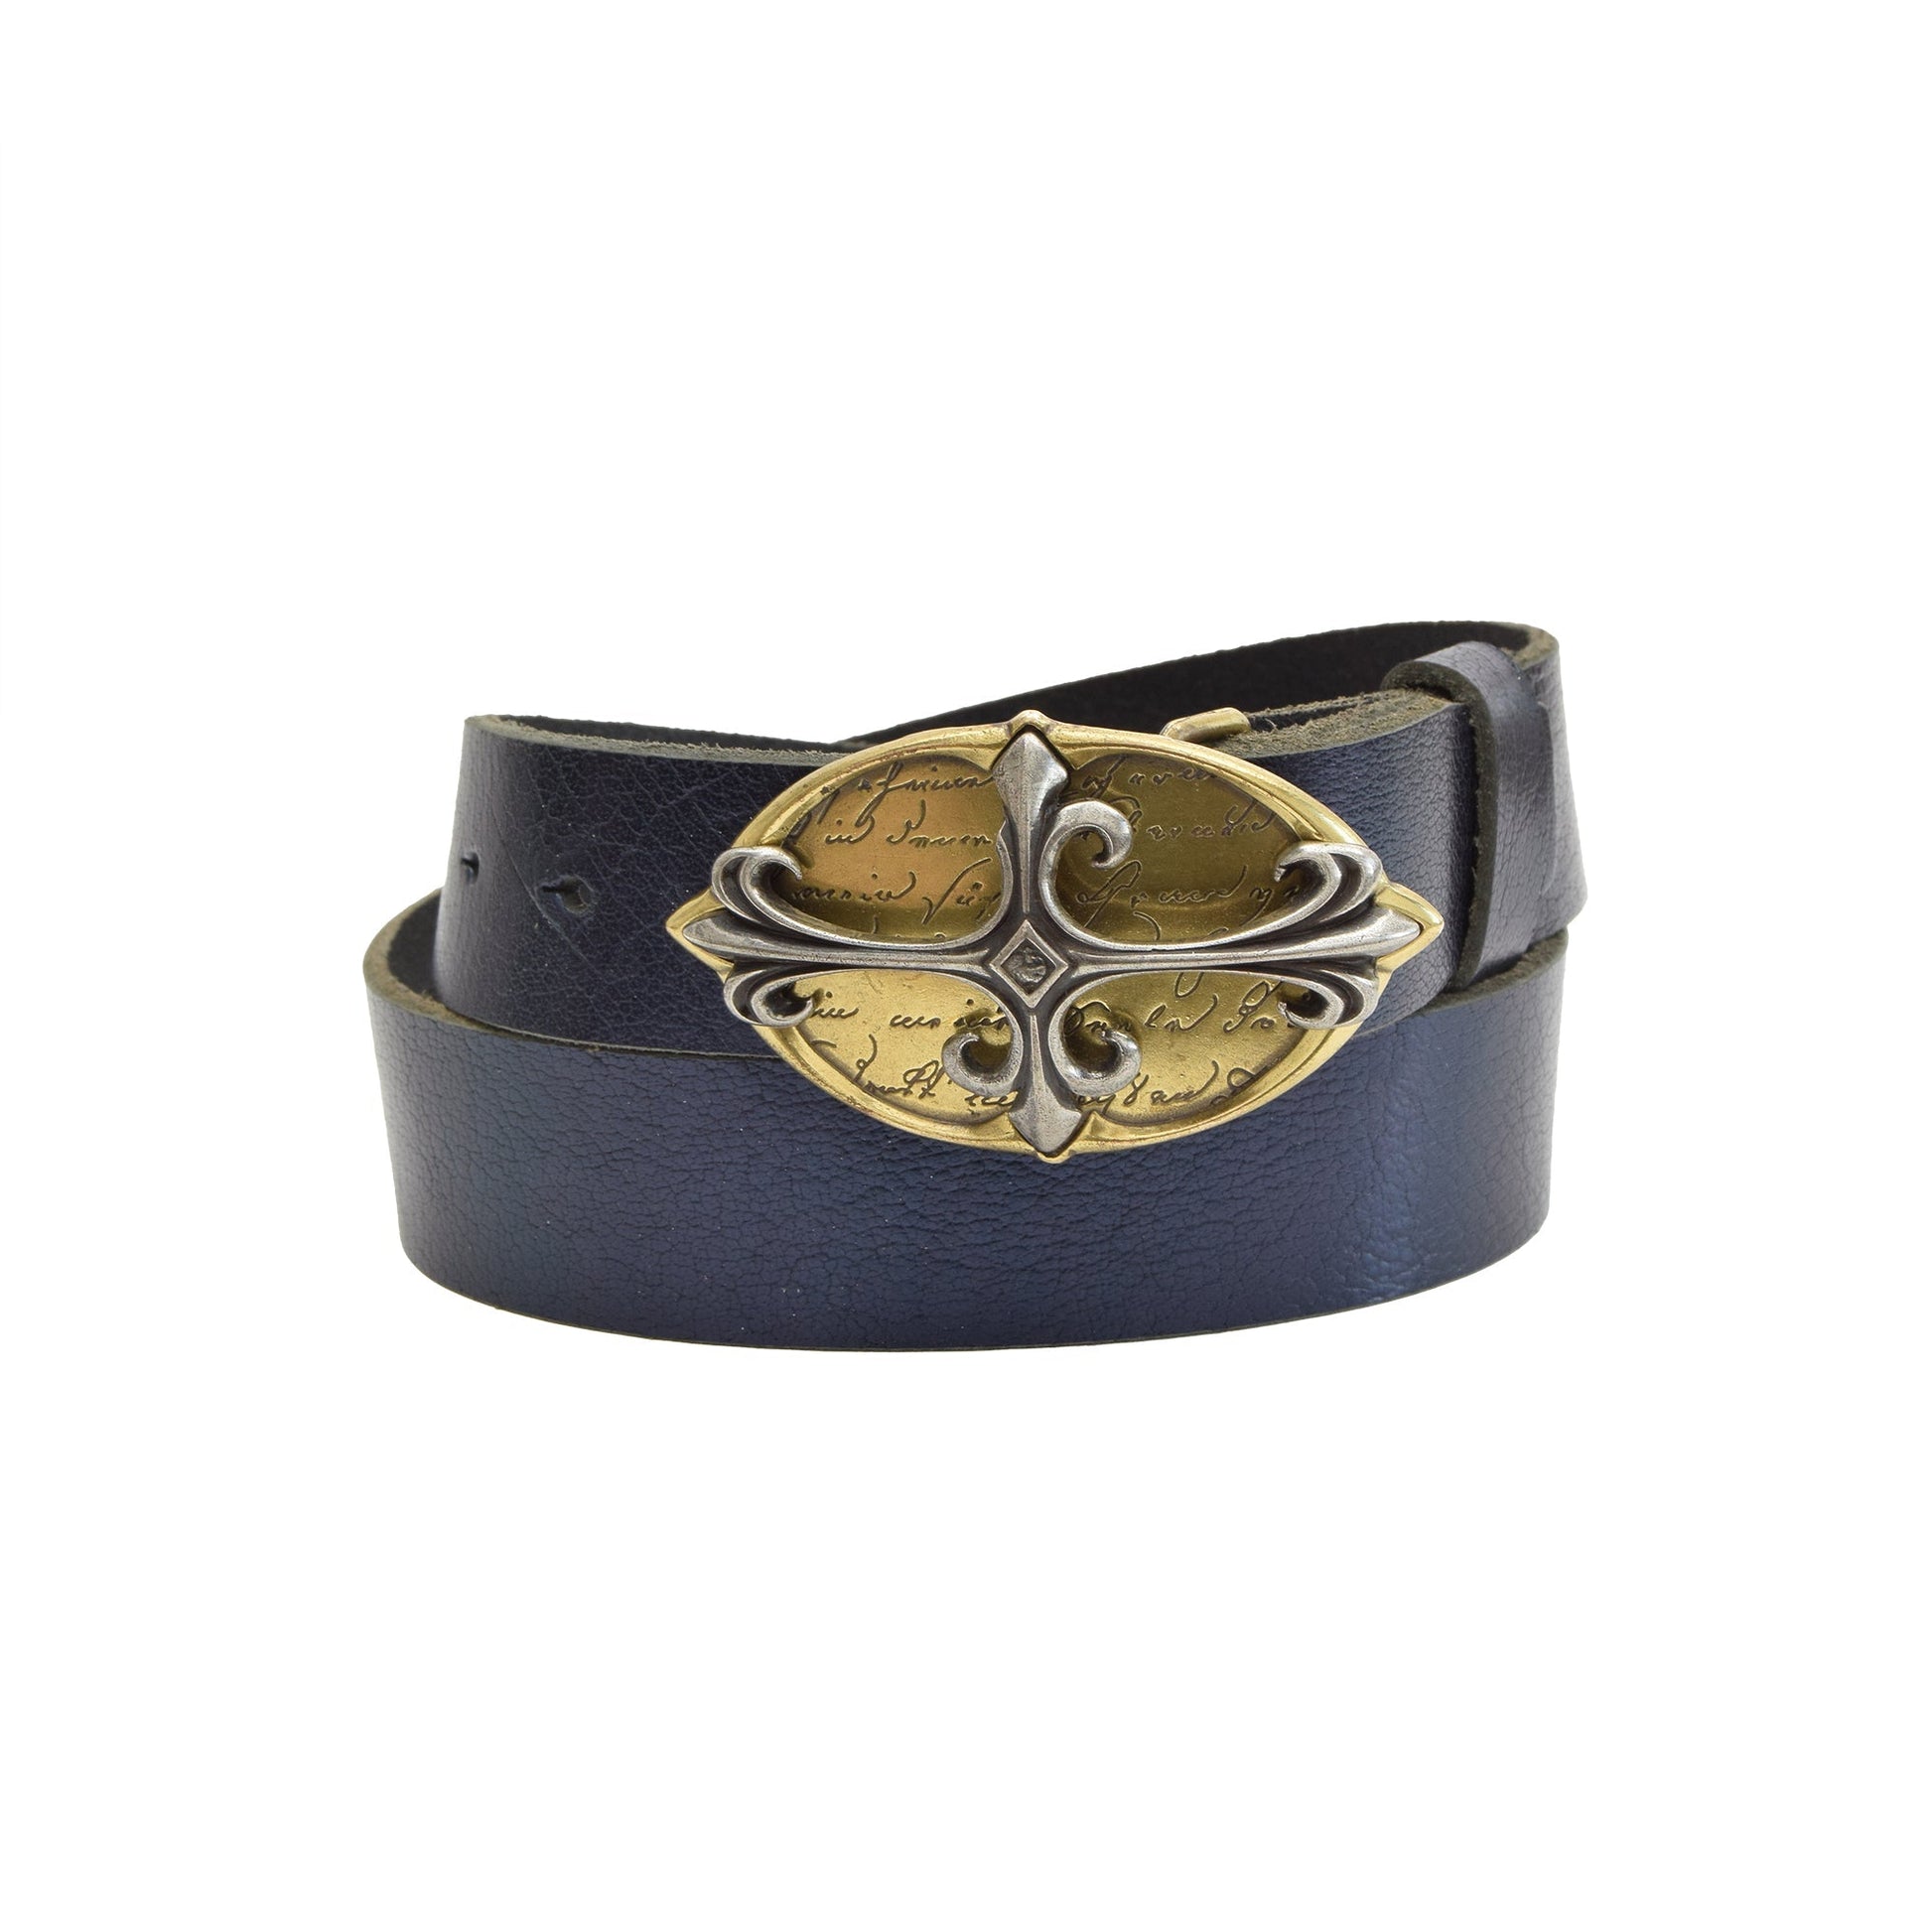 Jocunda Leather Belt Blue with Changeable Buckle - Belts Zengoda Shop online from Artisan Brands